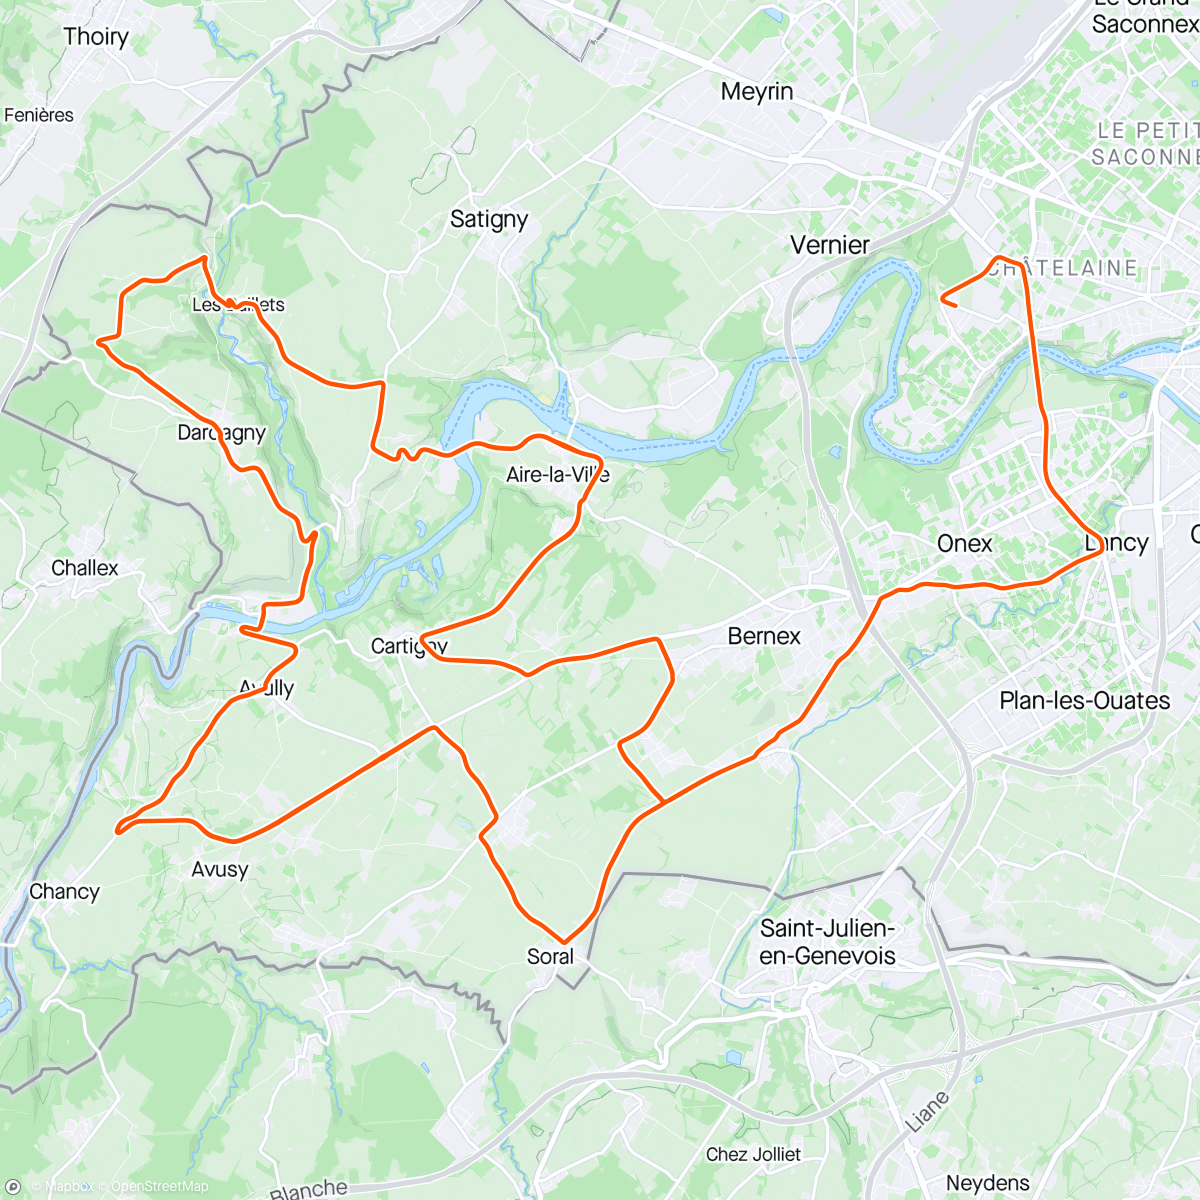 Mapa de la actividad (Bicicleta a la hora del almuerzo)